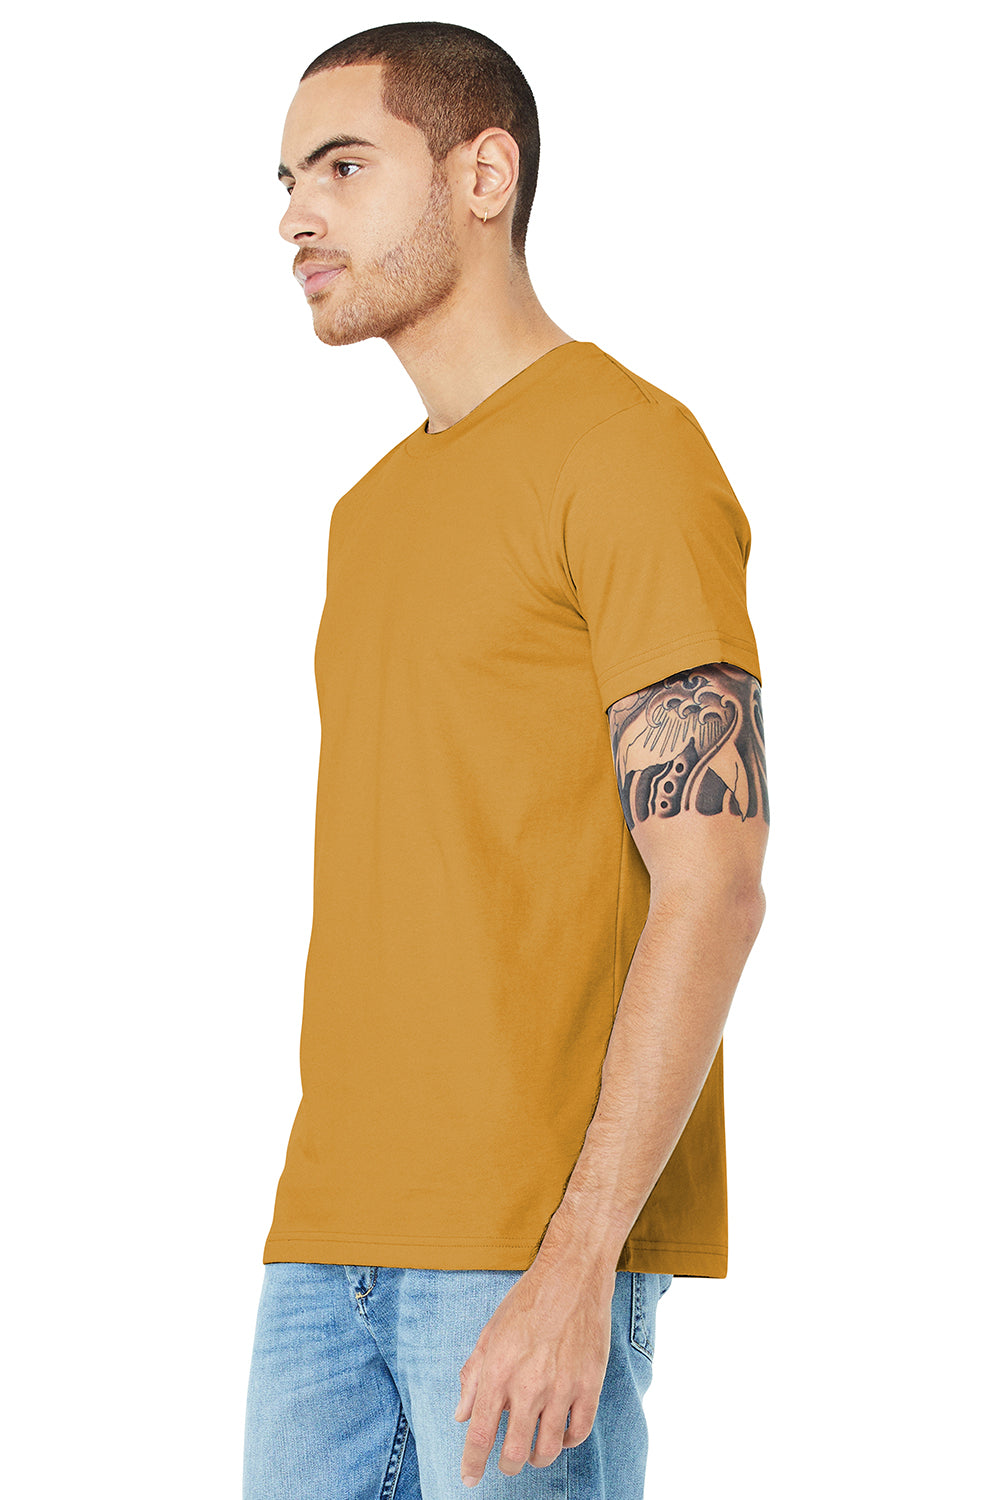 Bella + Canvas BC3001/3001C Mens Jersey Short Sleeve Crewneck T-Shirt Mustard Yellow Model 3Q